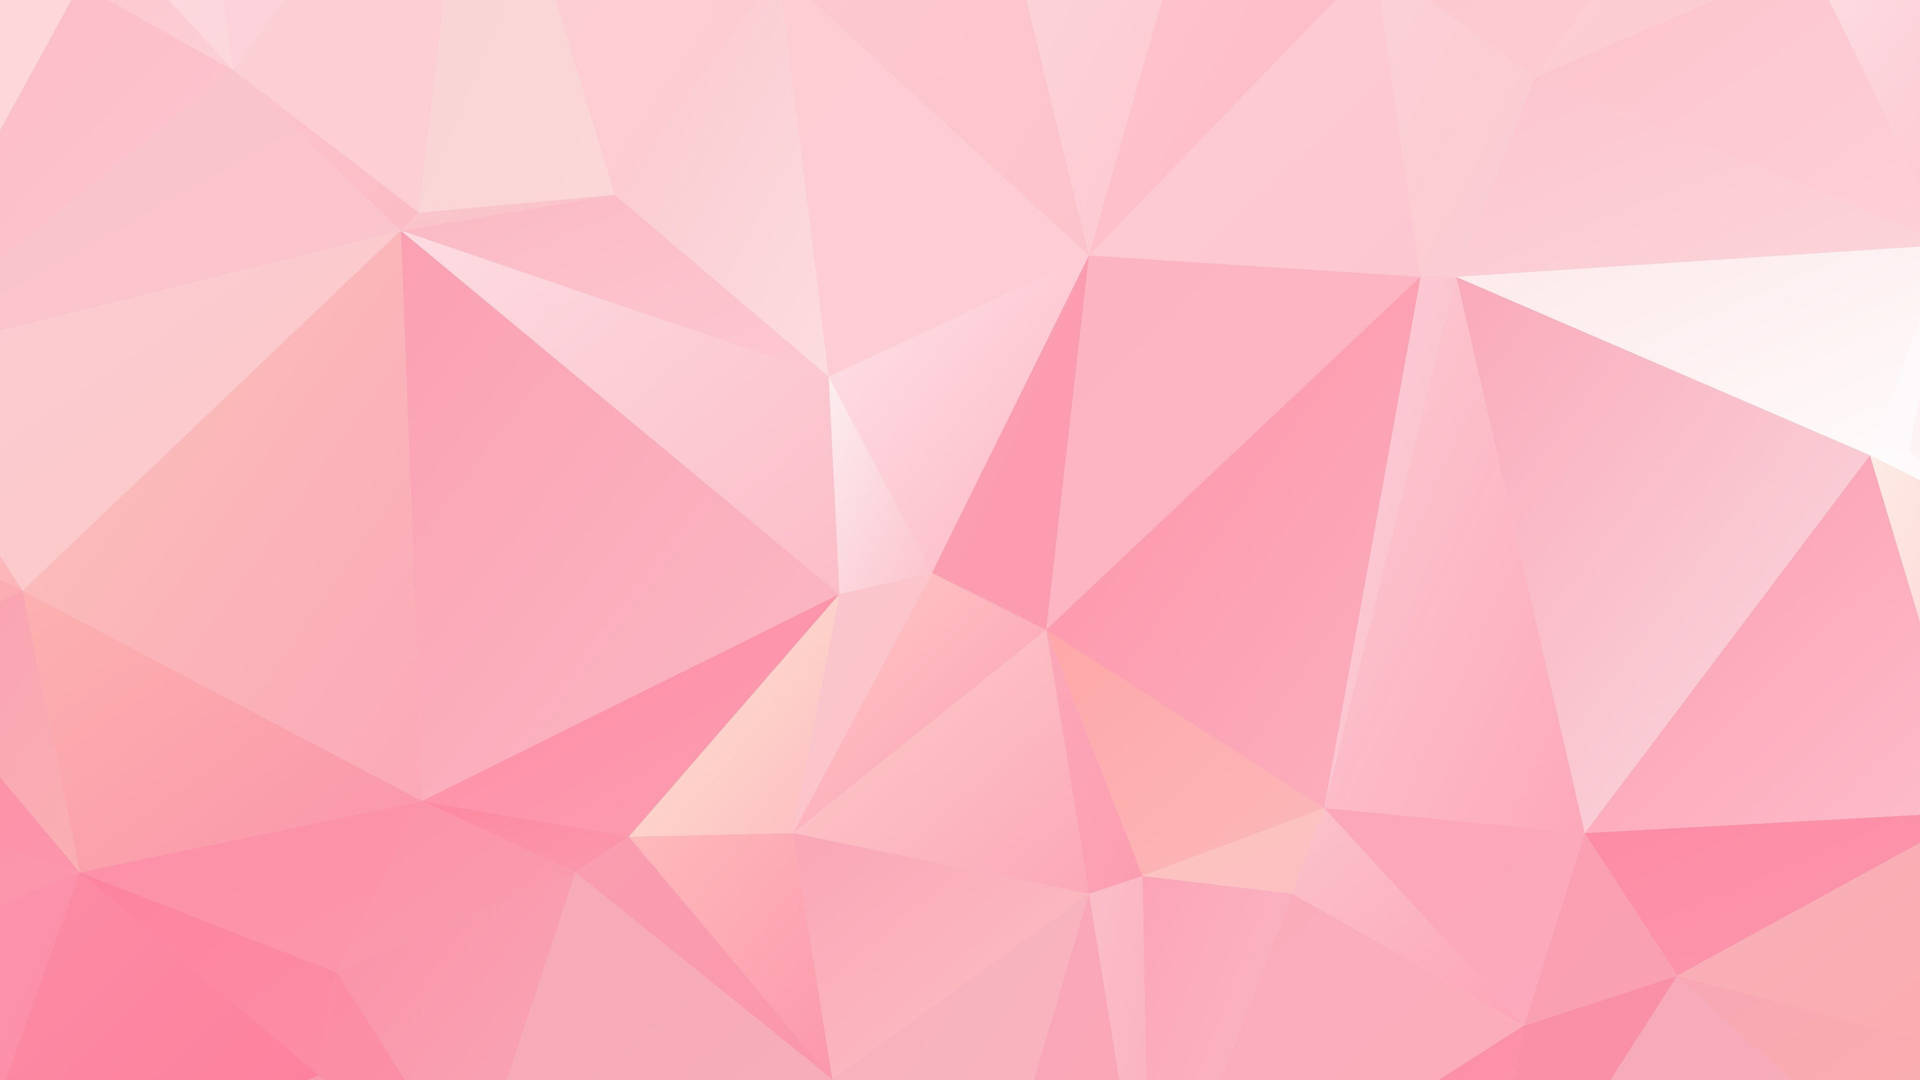 Pink Aesthetic Geometric Shapes Full 4k Background